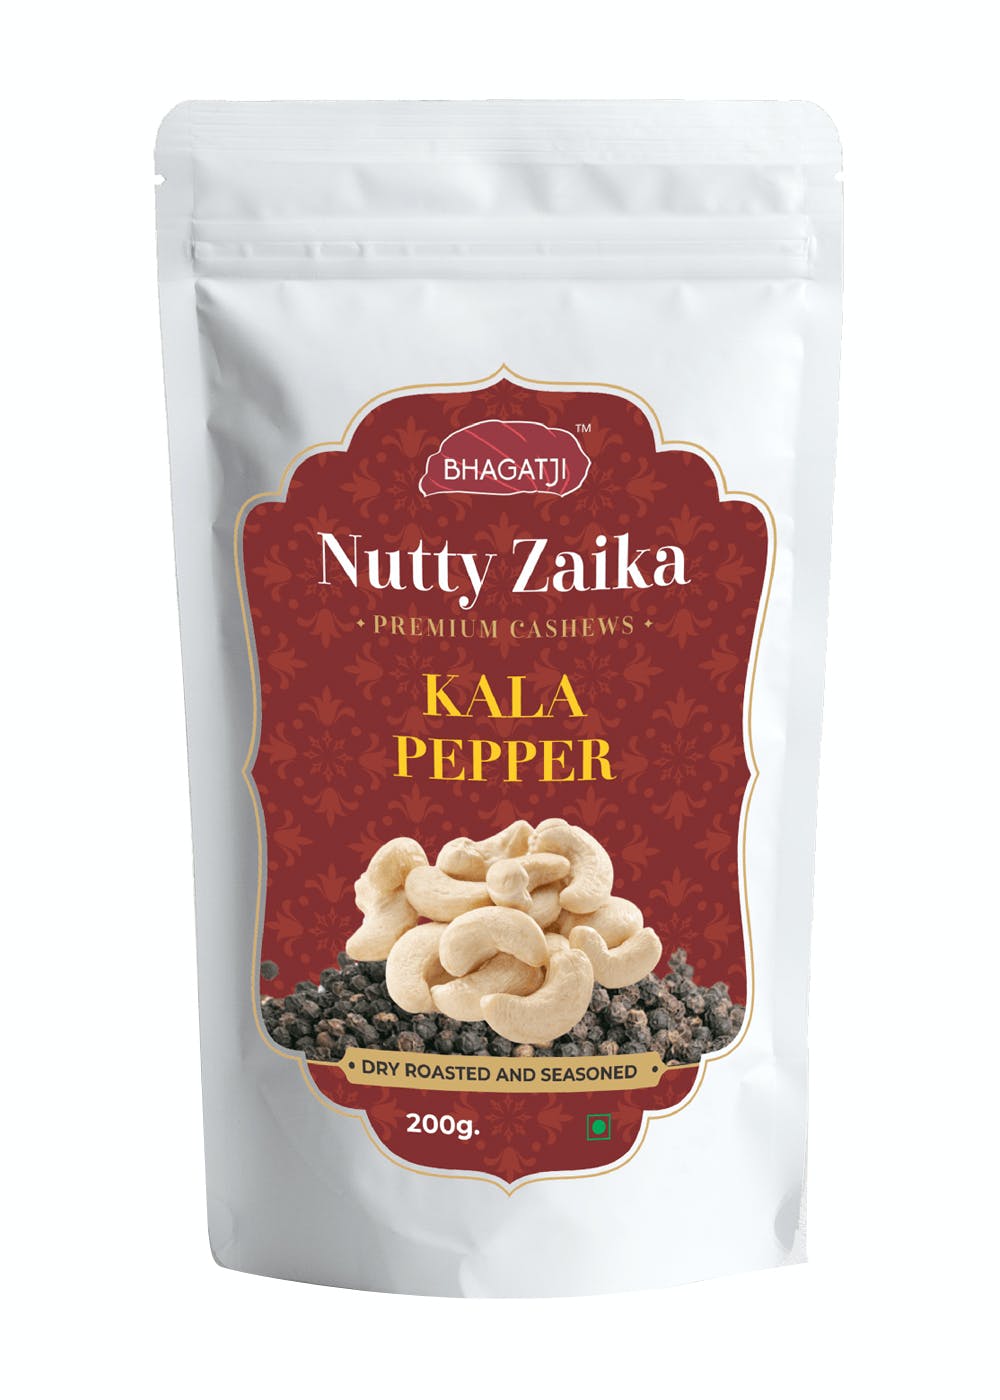 Nutty Zaika Premium Cashews (Kala Pepper) - 200g